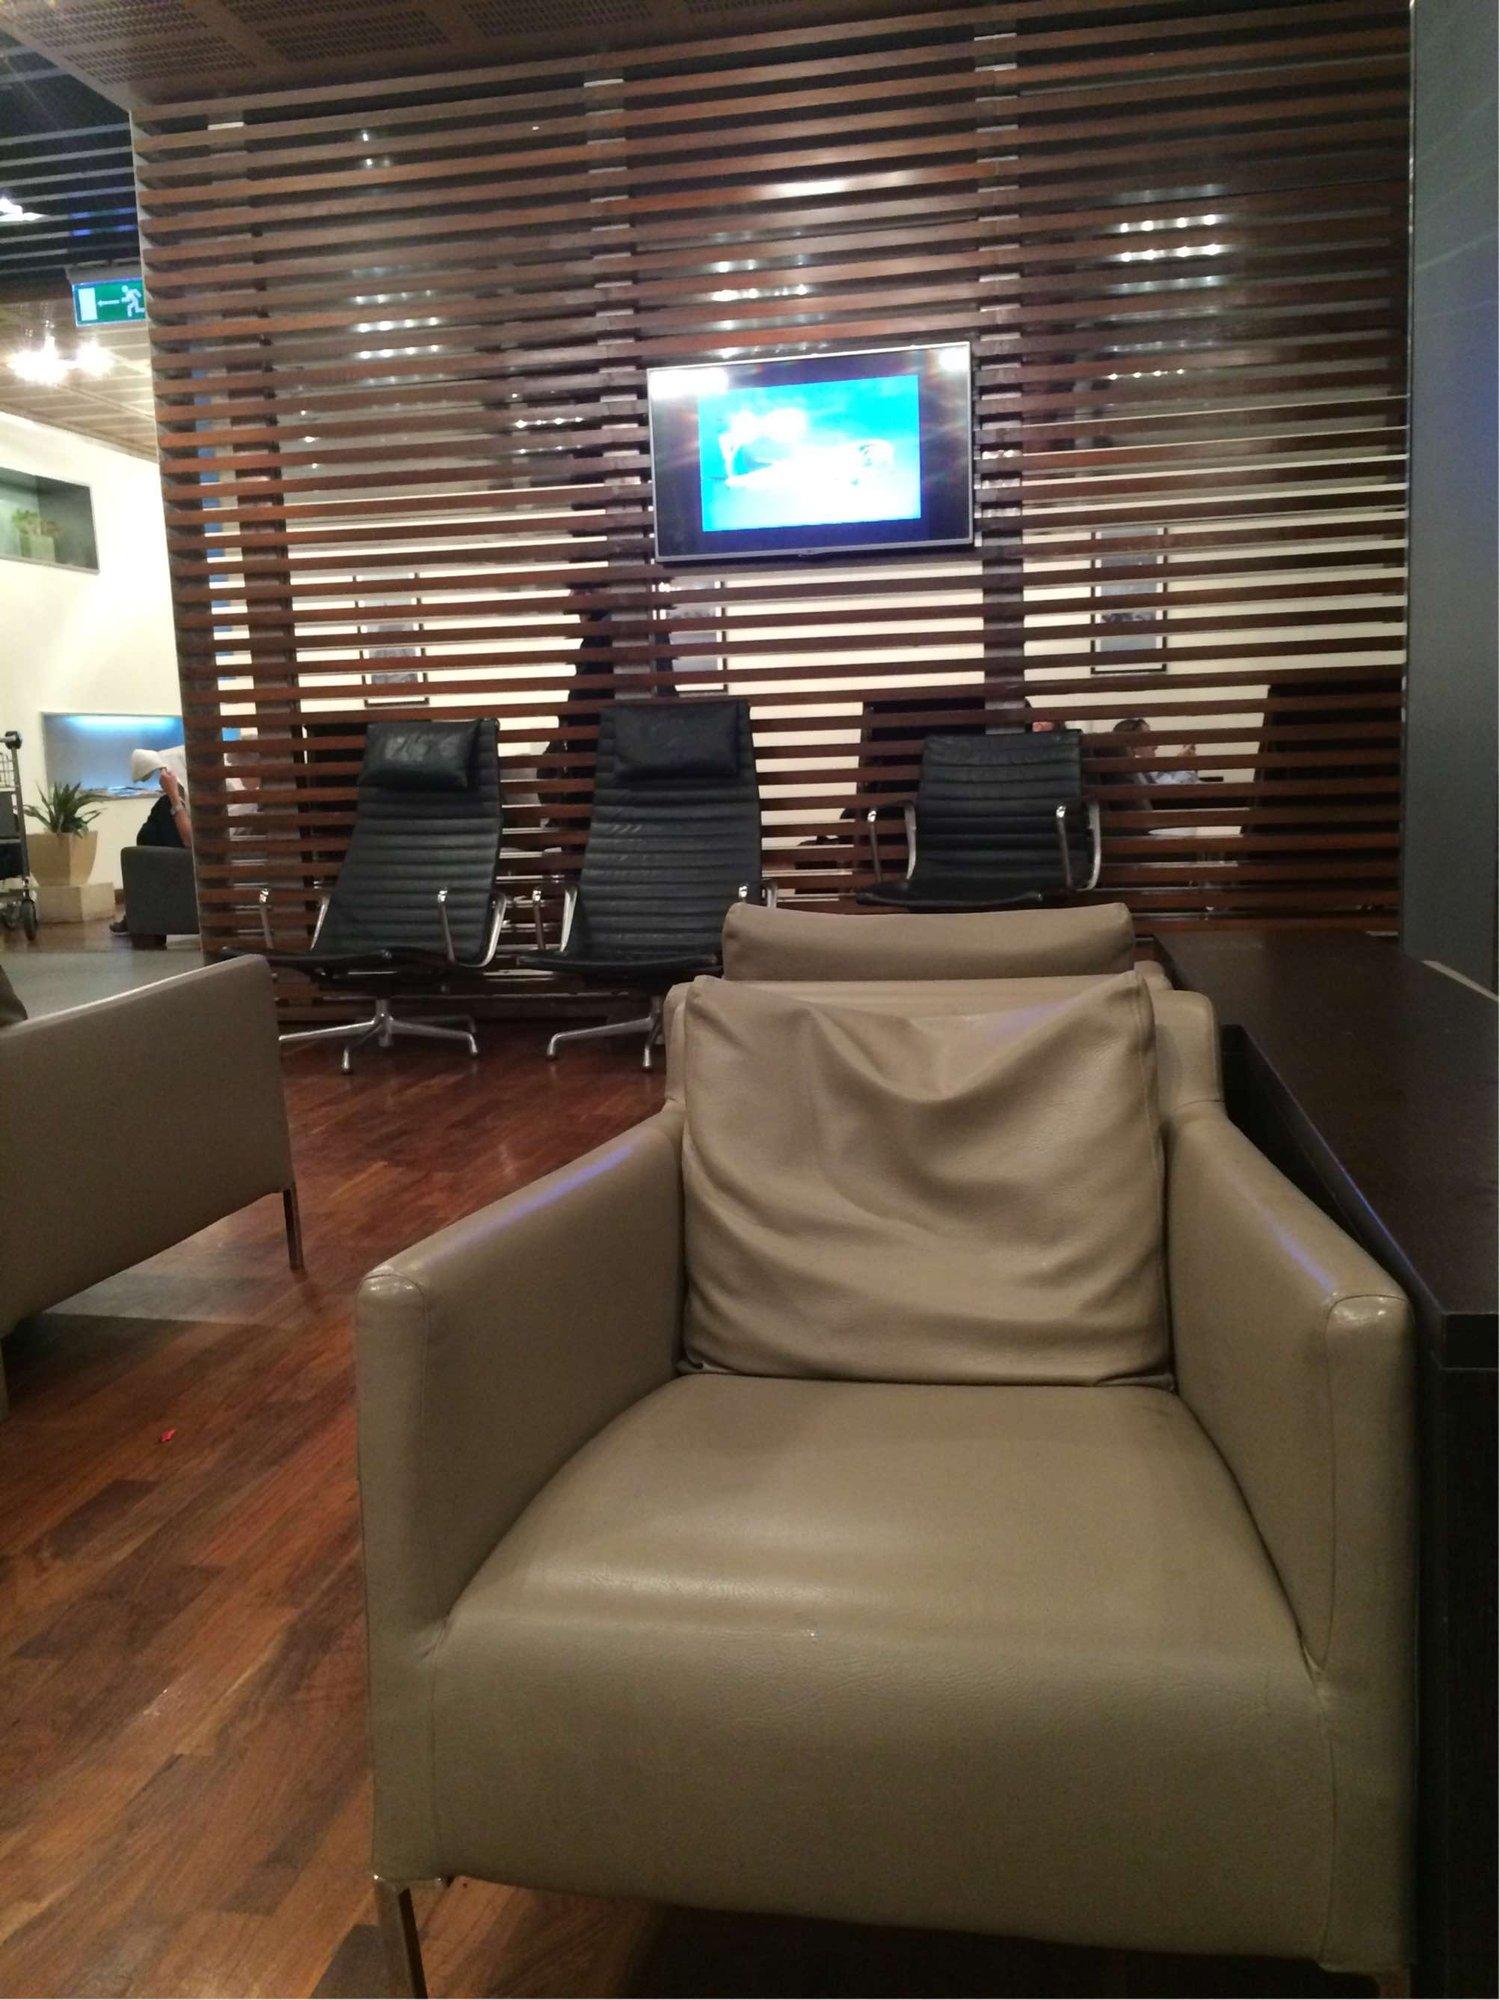 Egyptair Almeisan Lounge image 2 of 2